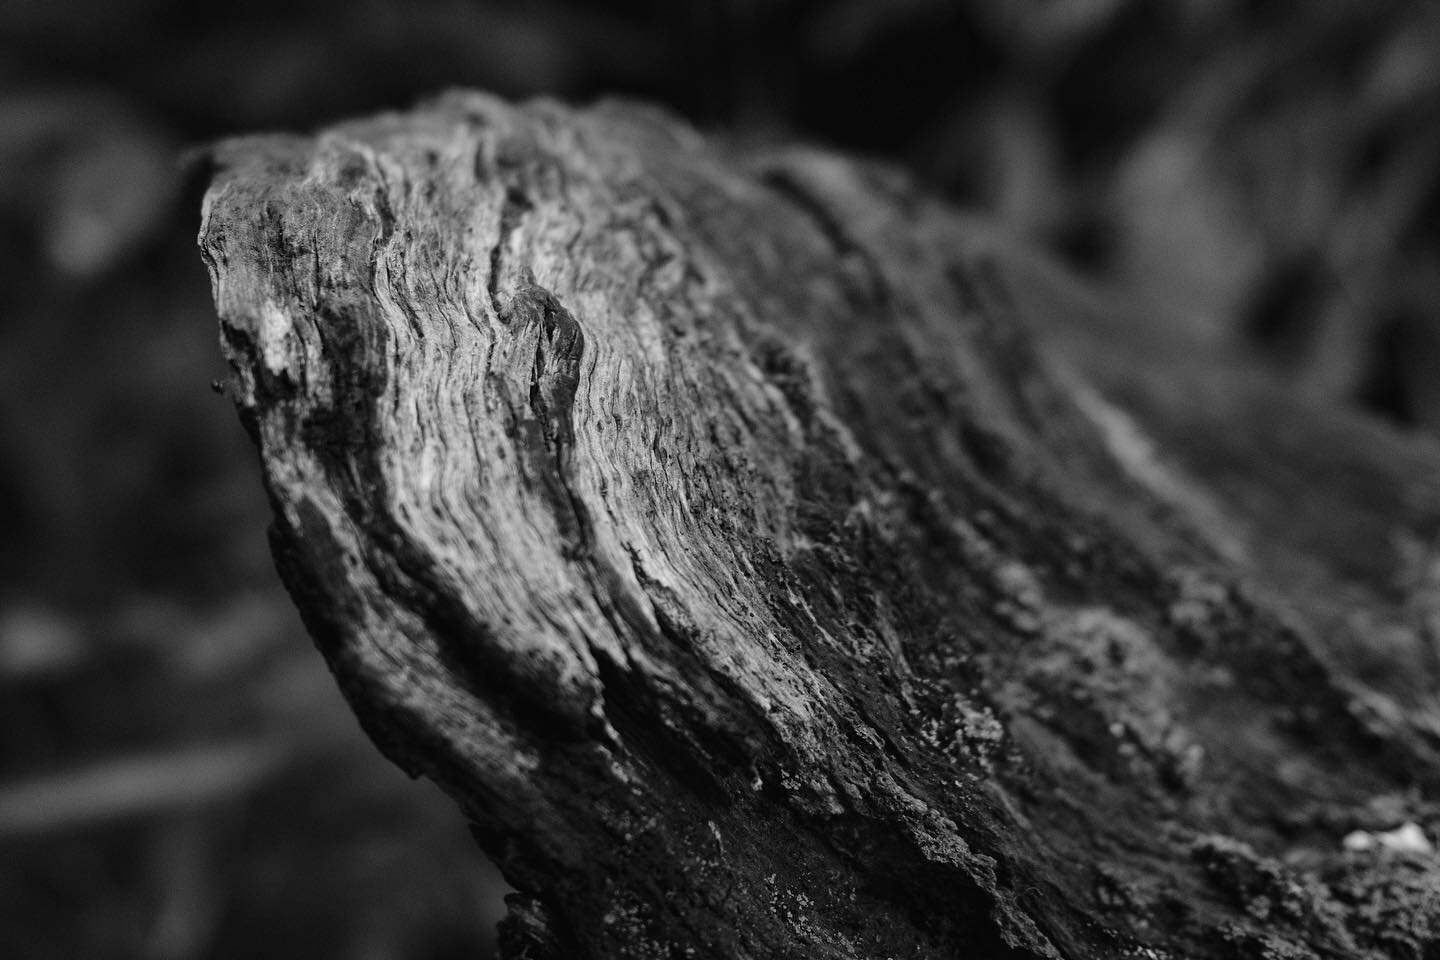 Fallen tree textures.

#blackandwhite #bw #hallphoto #hallphotographic #texture #tree #trunk #fallen #nature #gadens #swansea #wales #x100v #fuji #fujifilm #fujix100v #monochrome #artistic #photography #fujifilm_xseries #fujifilm_global #welsh #tones